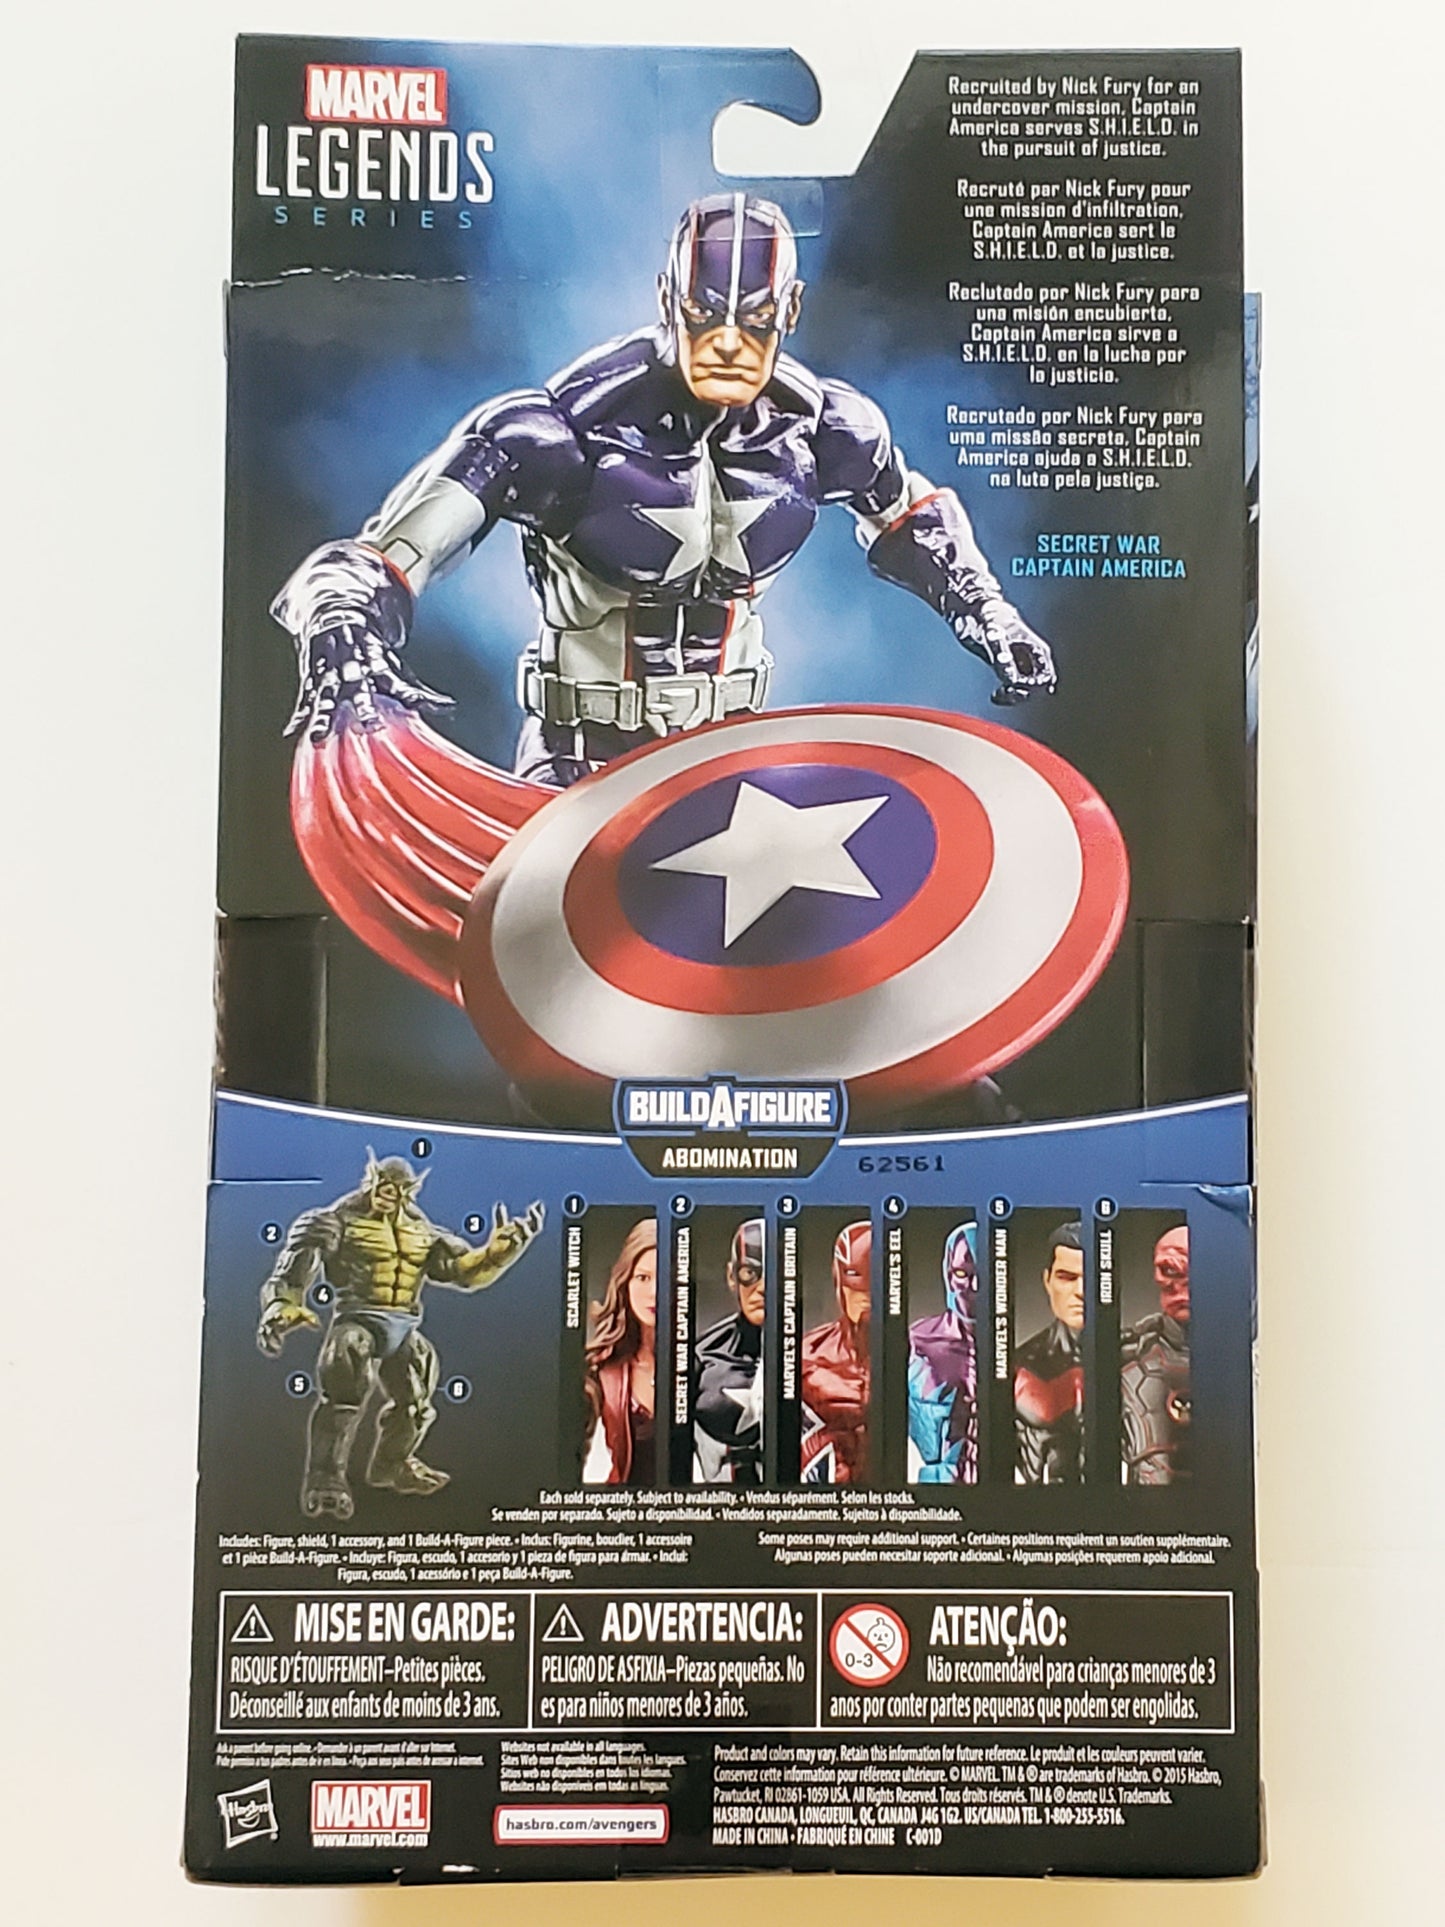 Marvel Legends Abomination Series Secret War Captain America